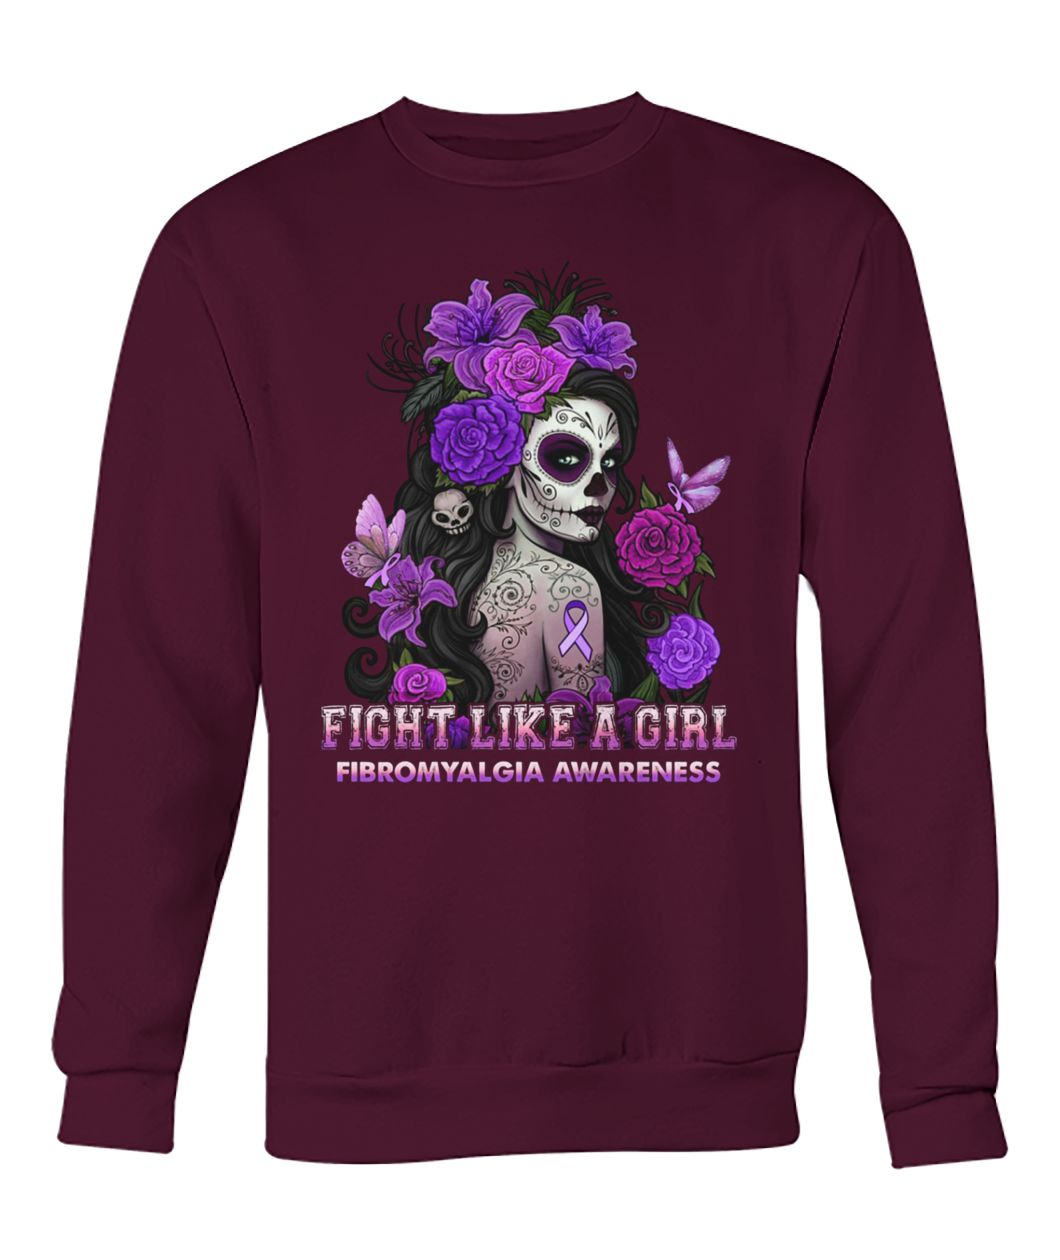 Fibromyalgia awareness sugar skull fairy fight like a girl crew neck sweatshirt